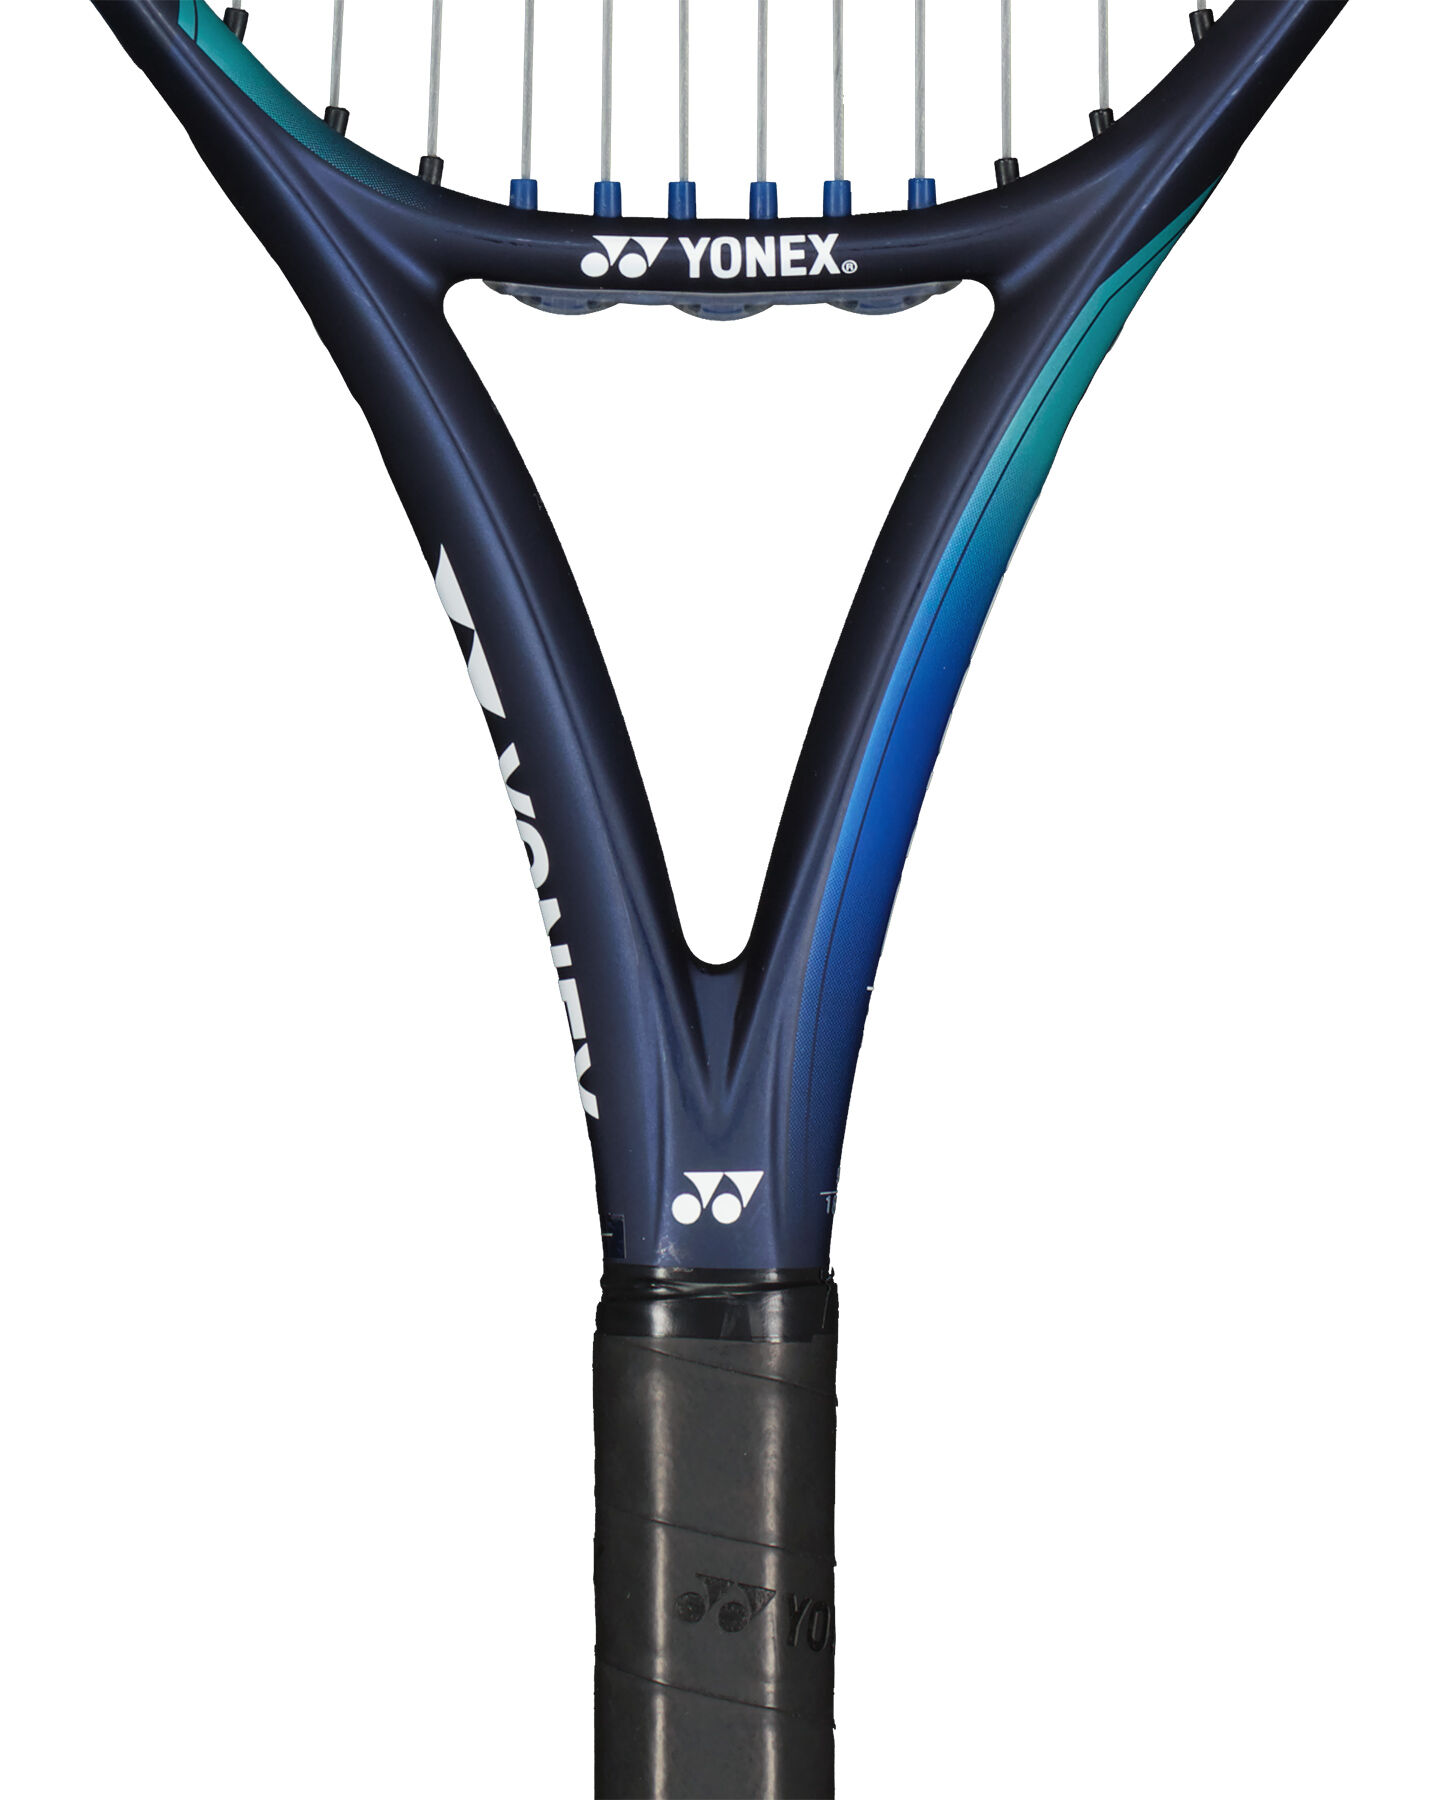  Racchetta tennis YONEX EZONE 25 102-240 G1 JR S4127975|UNI|1 scatto 3